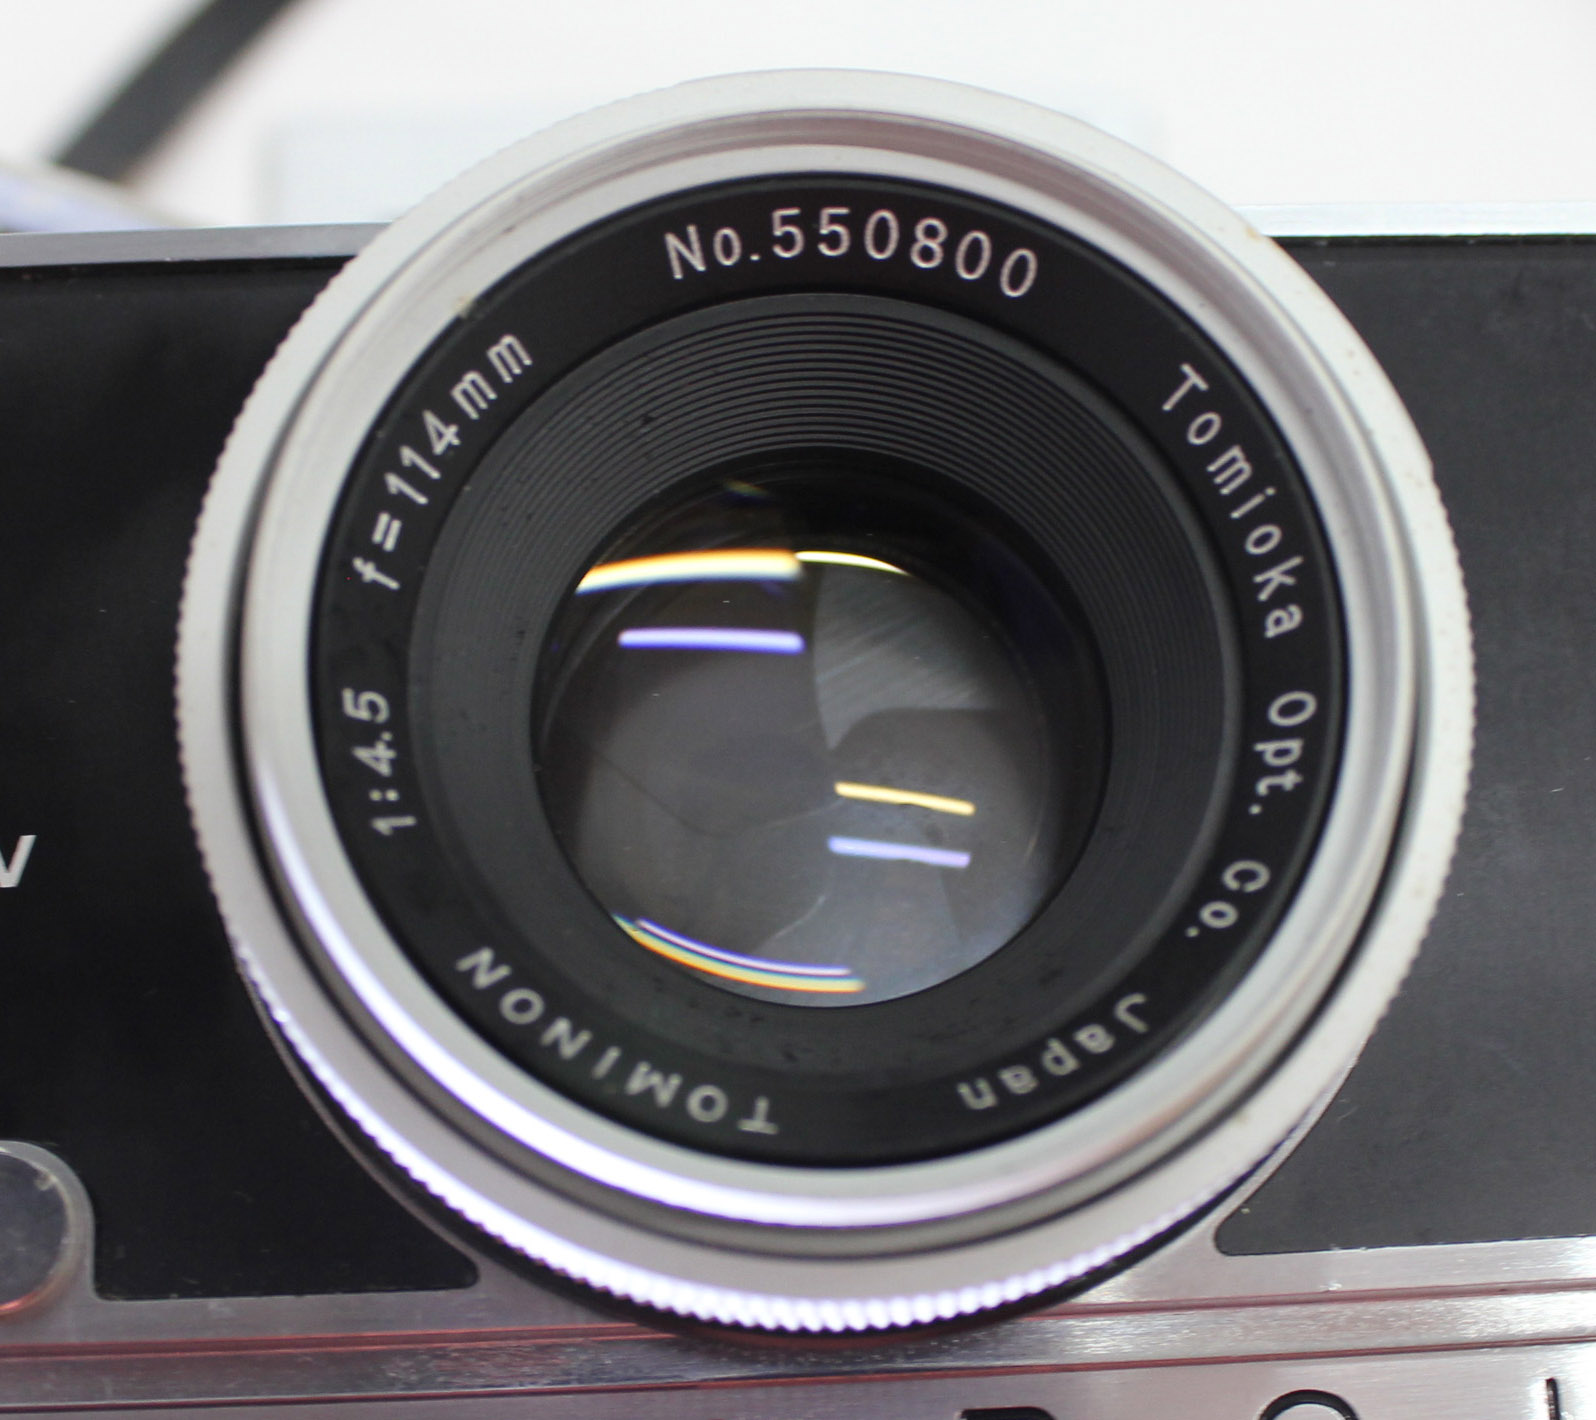  Polaroid Land Camera Model 180 Instant Film Camera w/ Tominon 114mm F/4.5 from Japan Photo 6